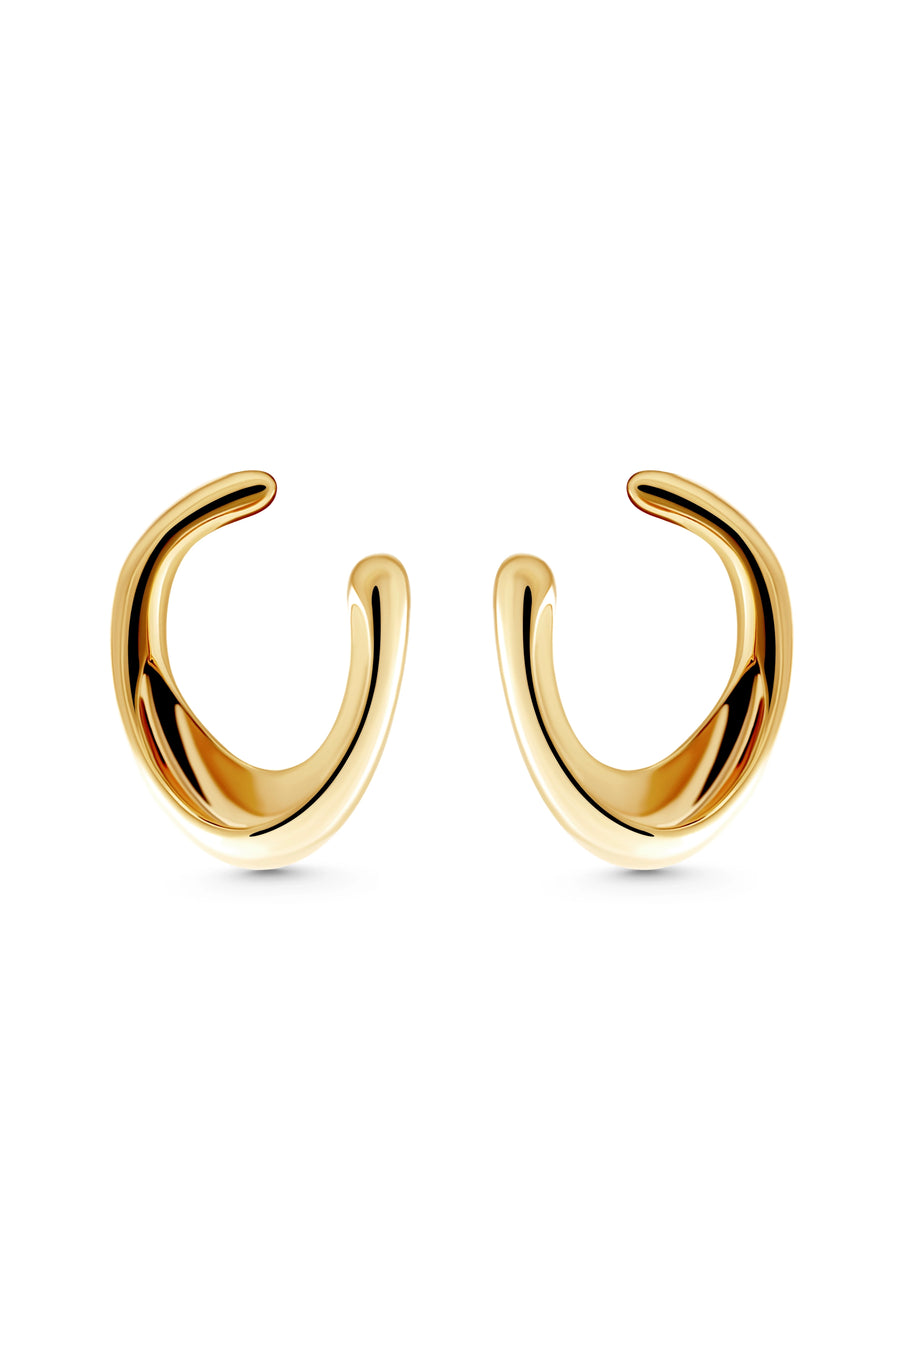 SOLCH LAGOM Edgy & Modern. Semi-circular hoop earrings.